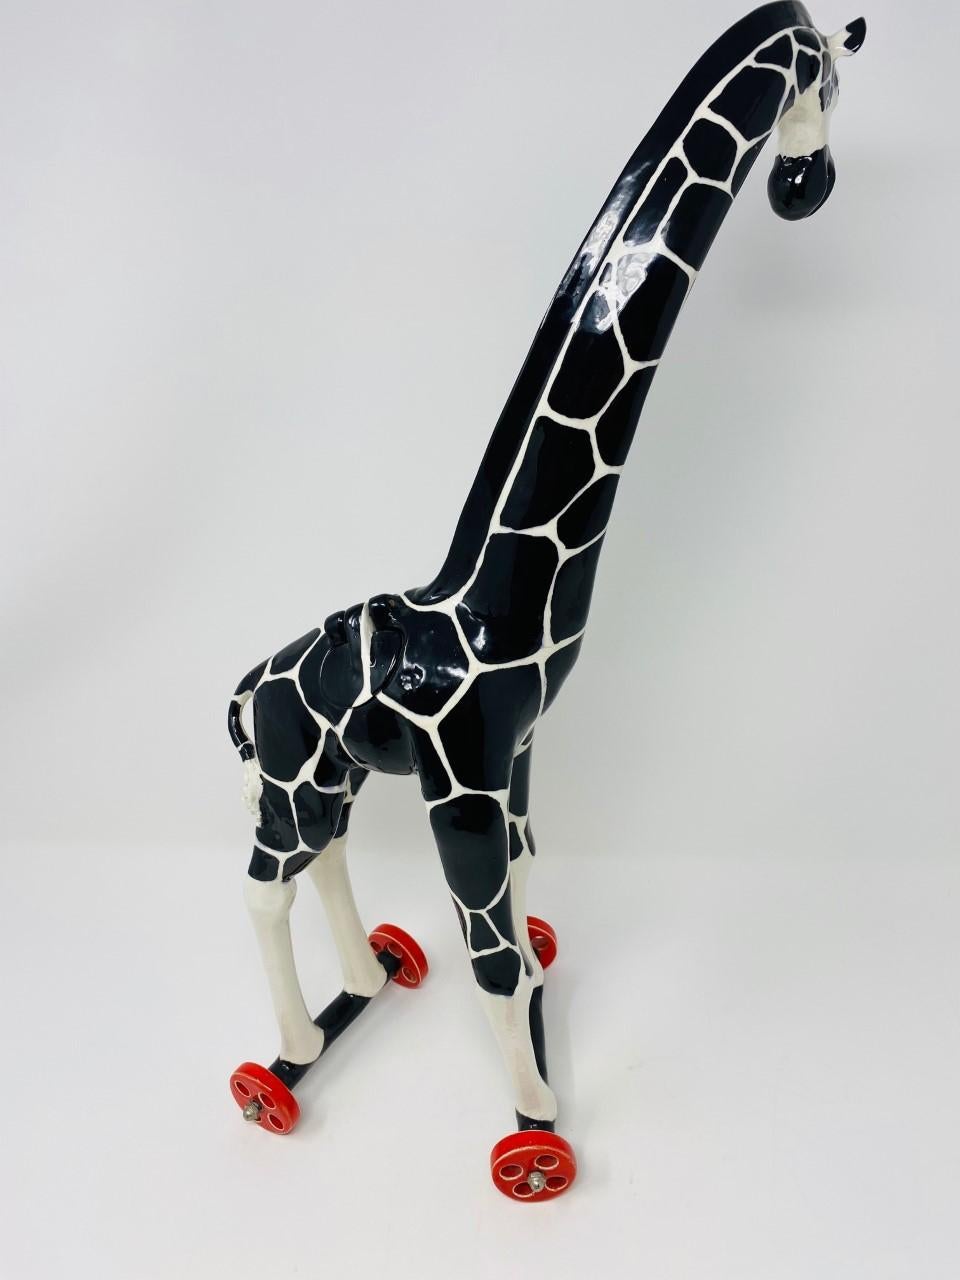 Giraffe on Wheels Sculpture by Andree Richmond  1